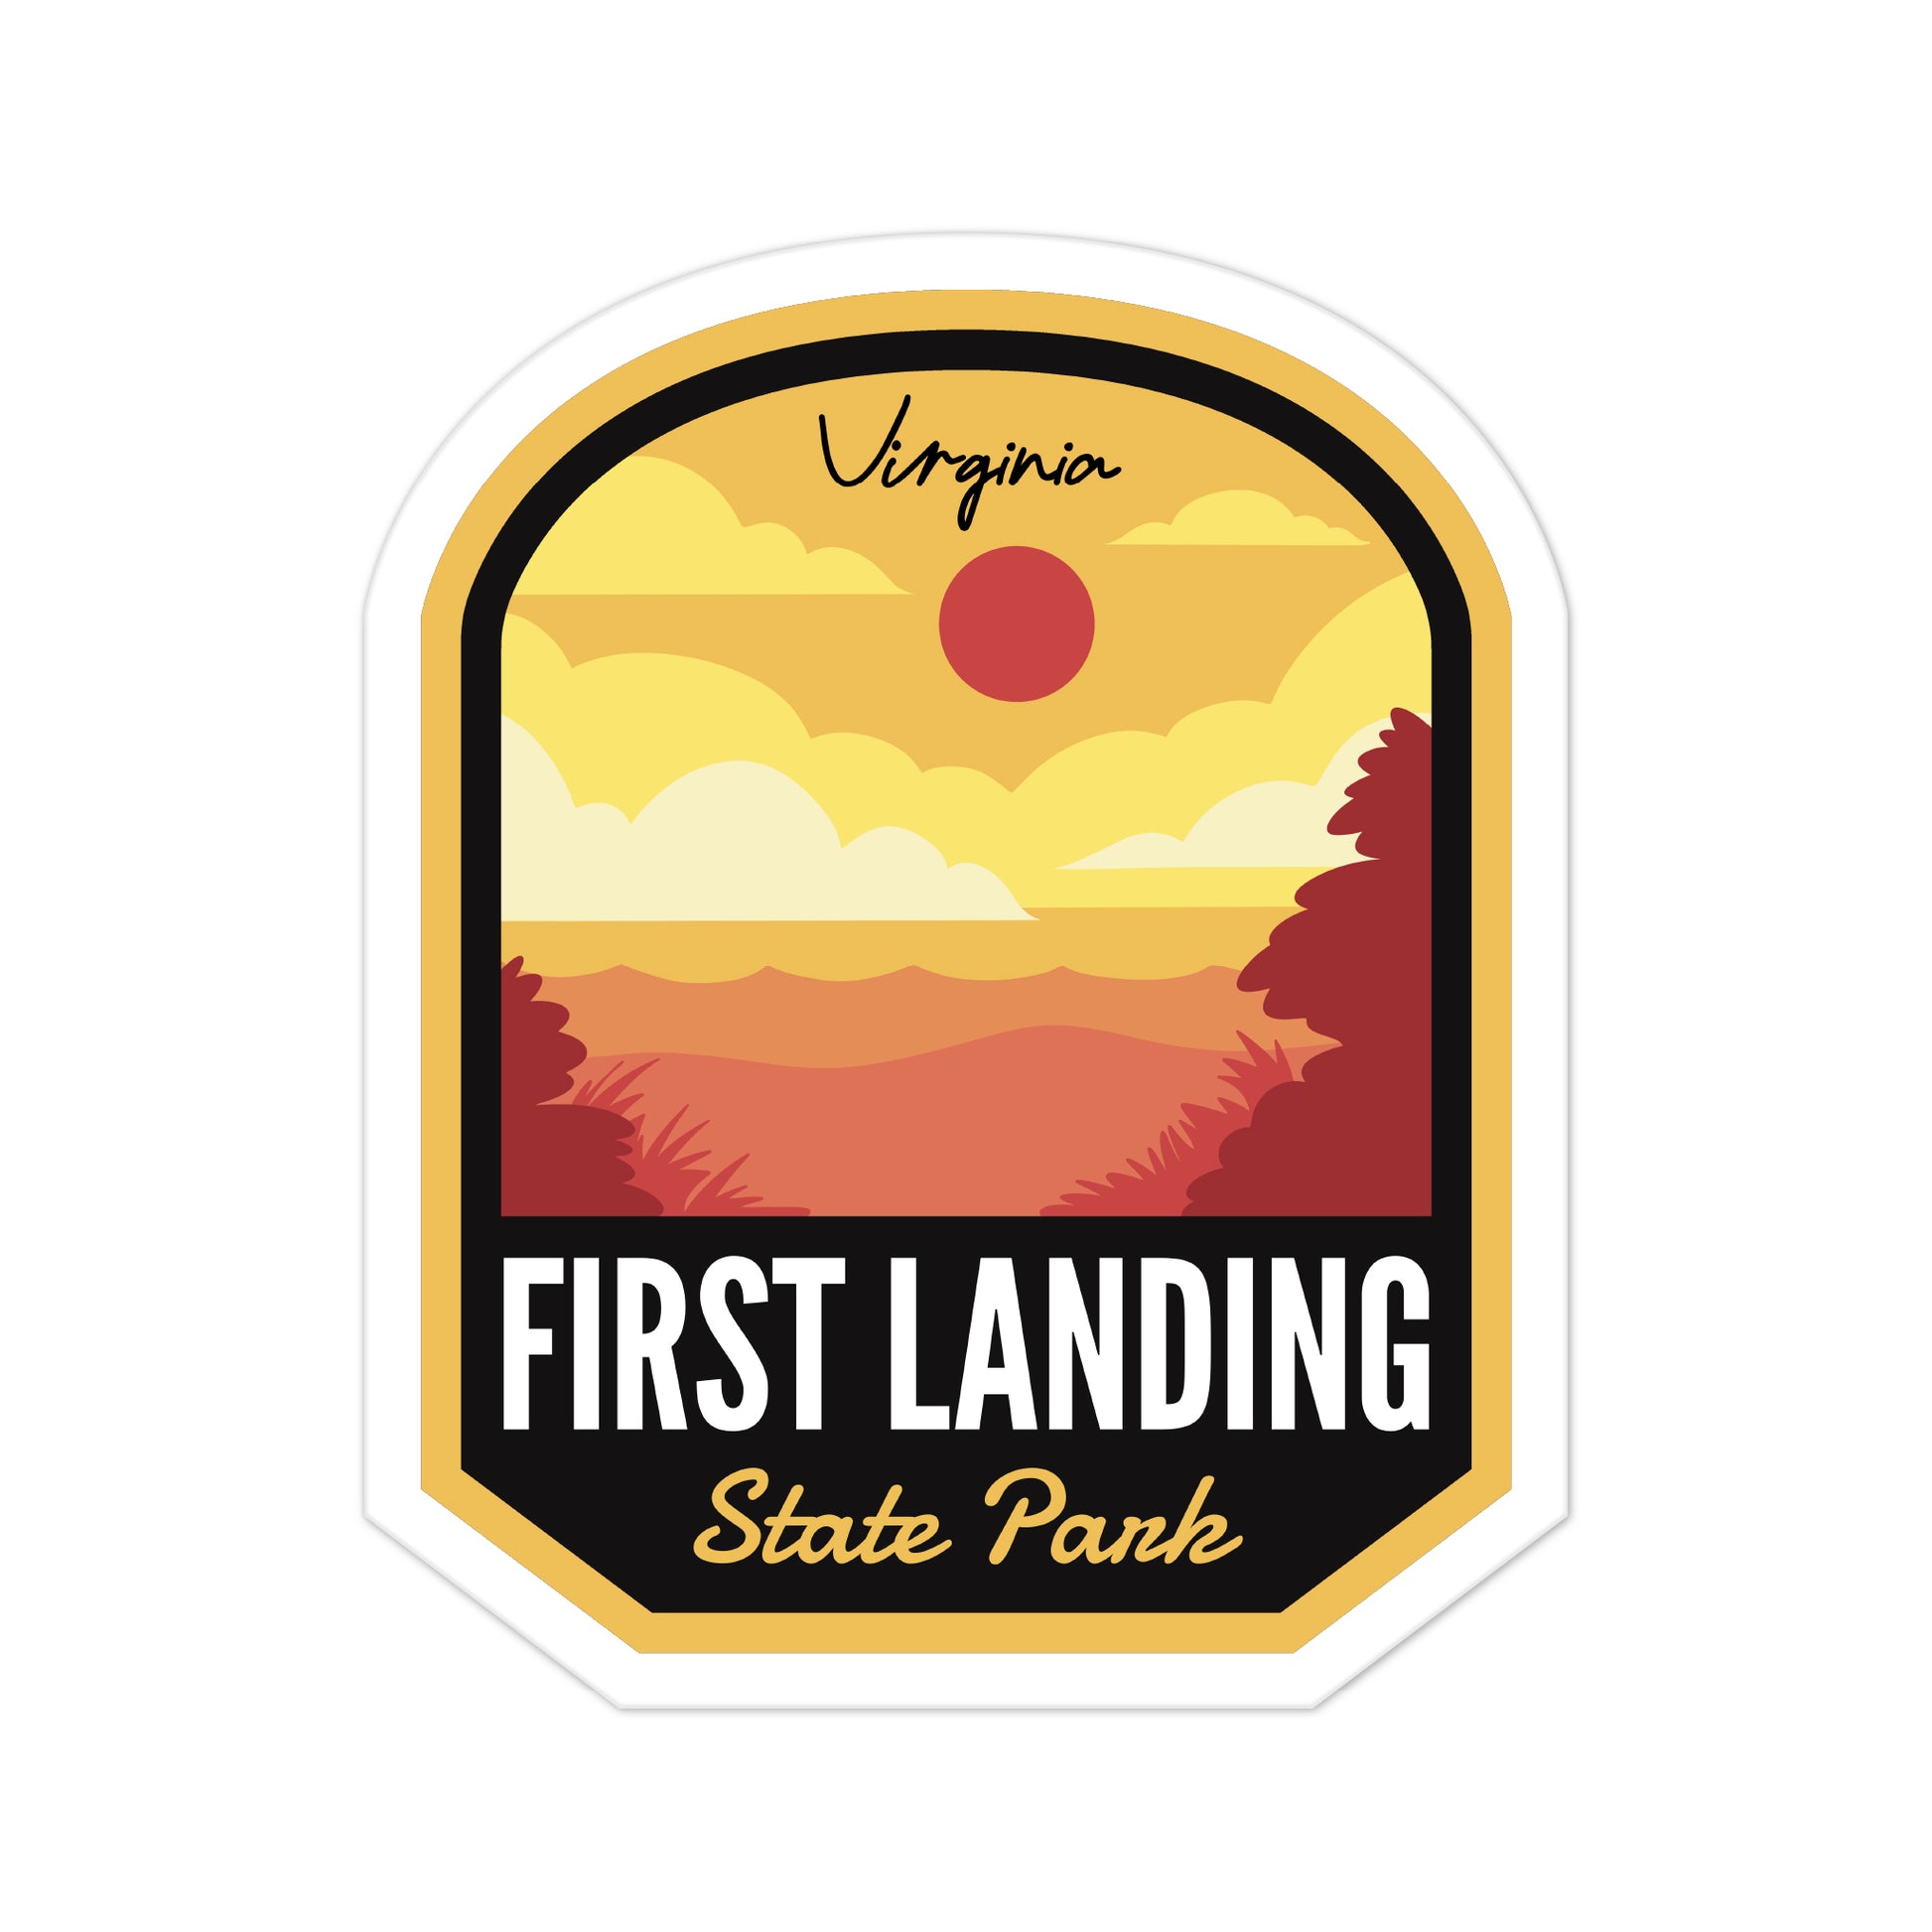 A sticker of First Landing State Park